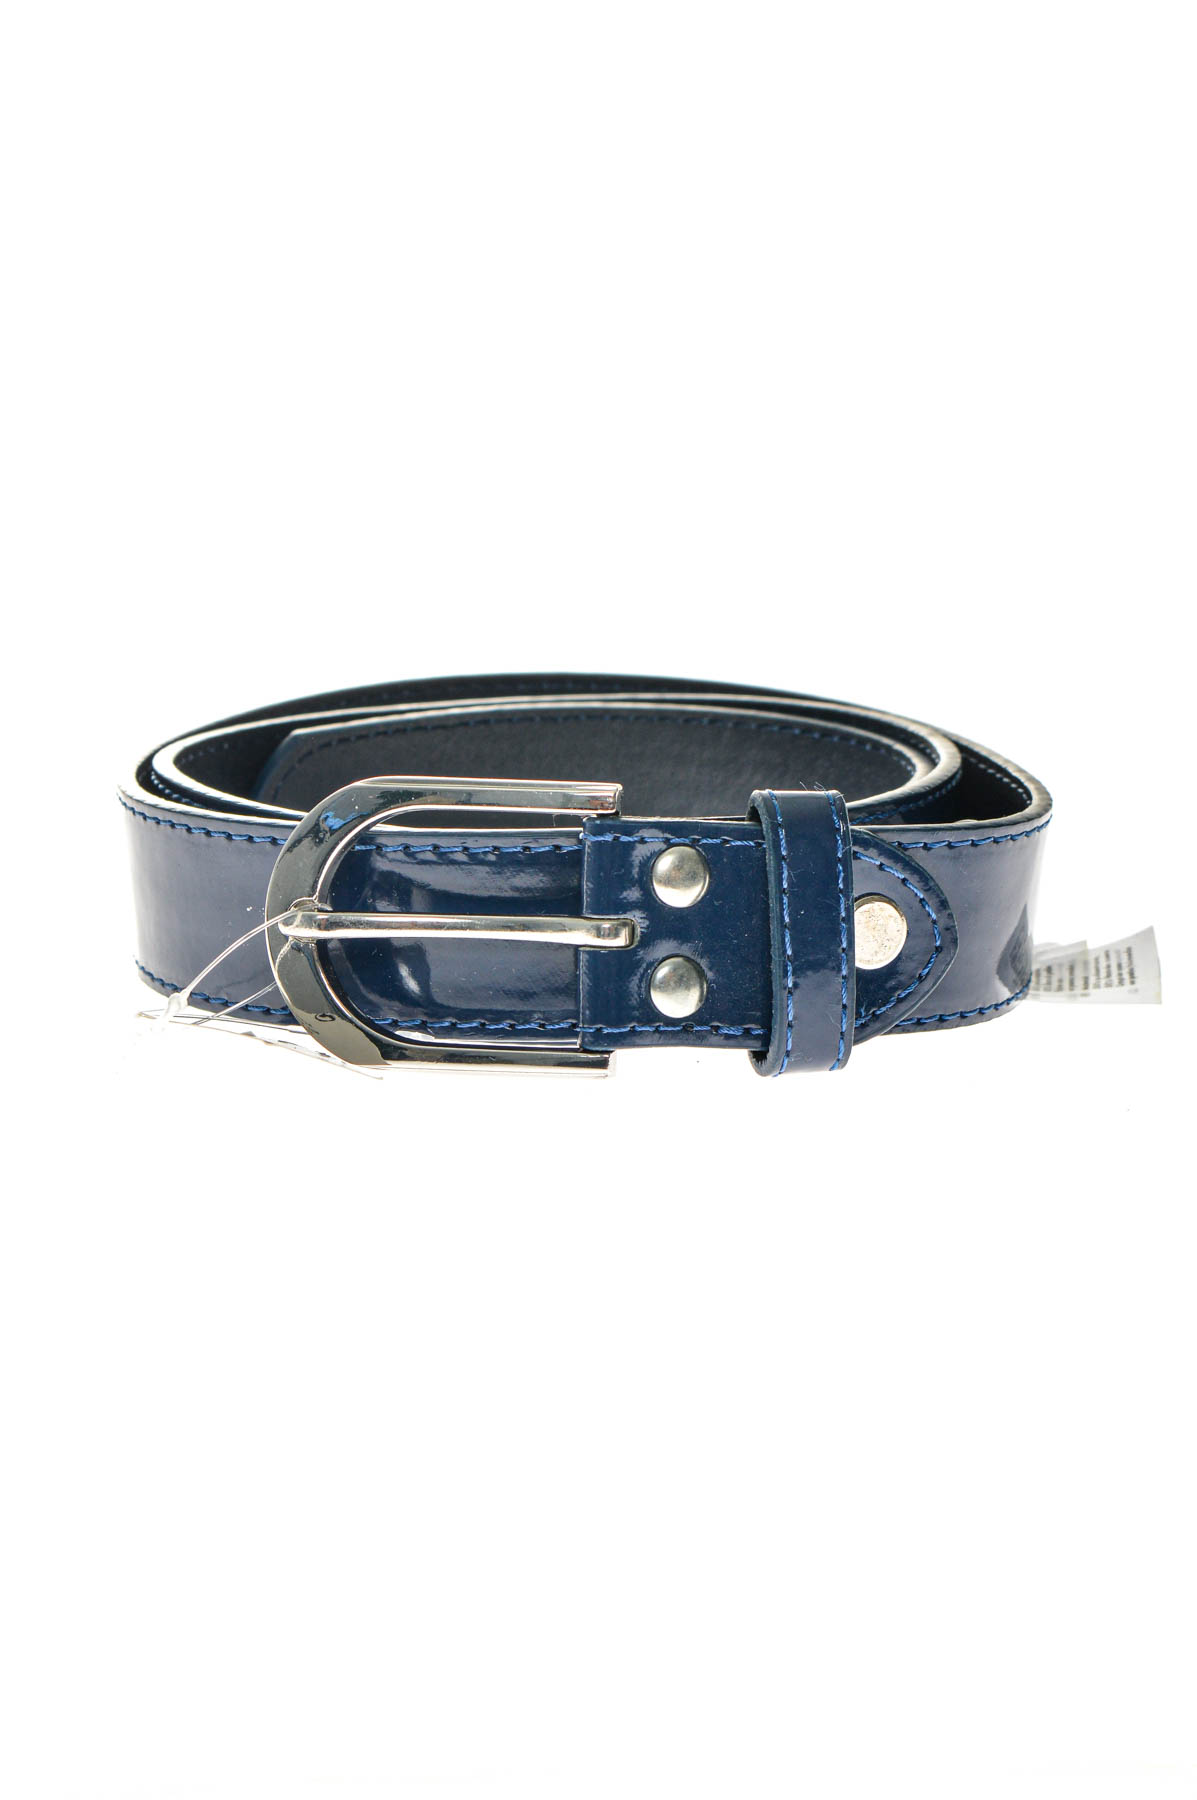 Ladies's belt - Esmara - 0